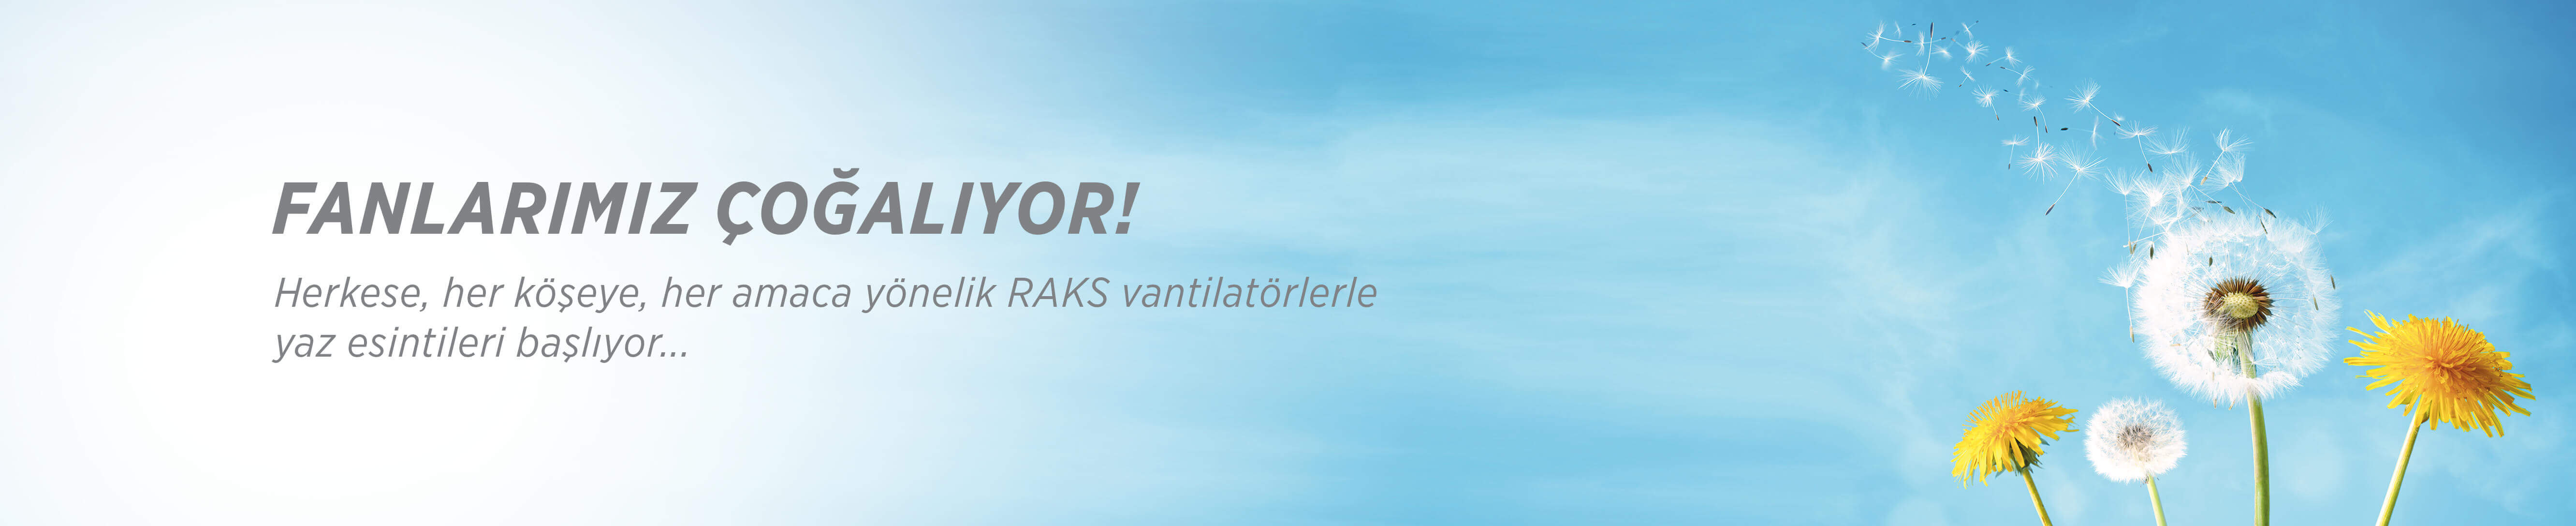 RAKS SF 16 RX Ventilateur à Pied